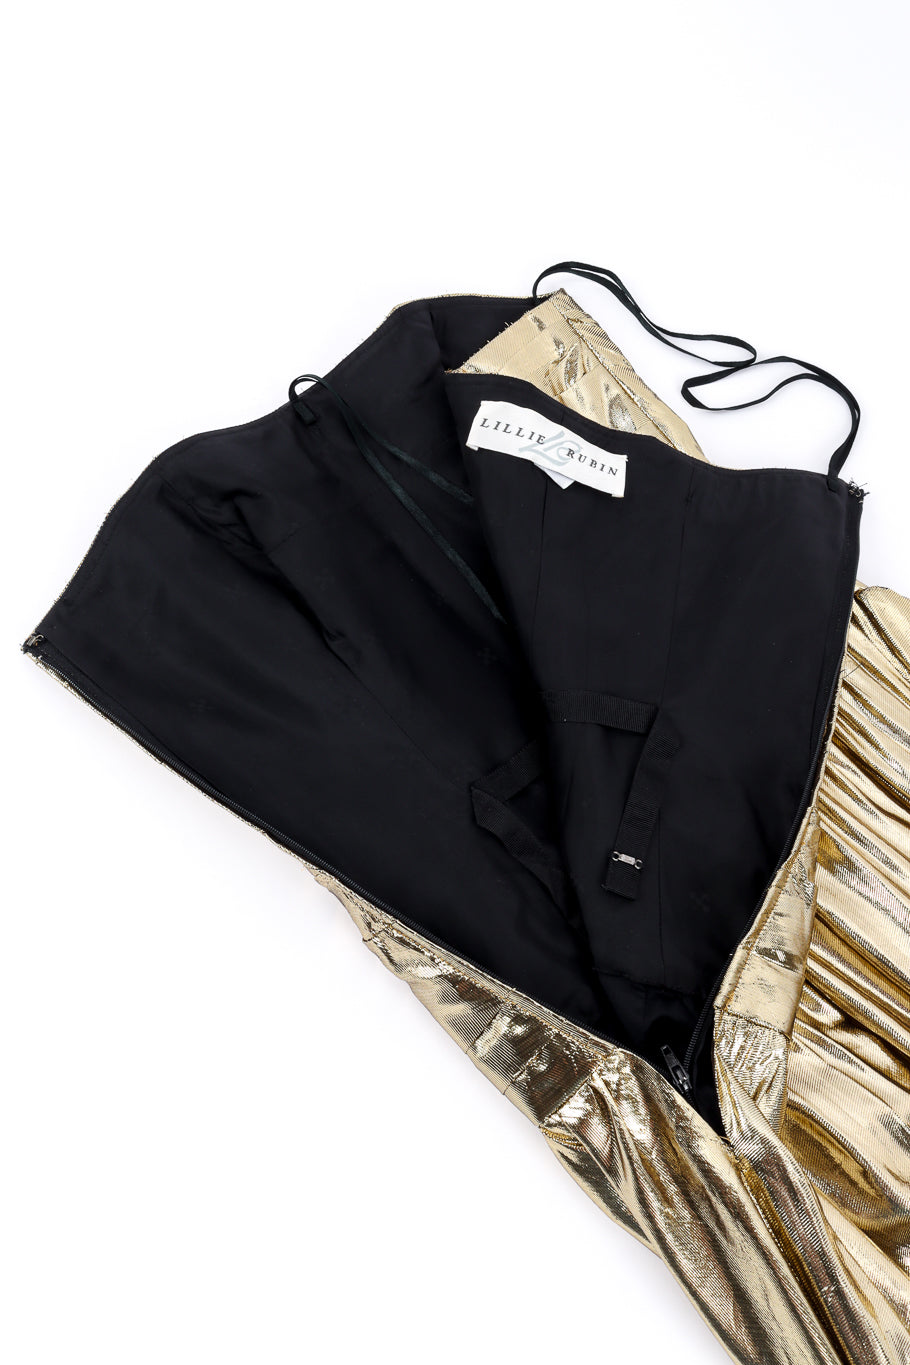 Asymmetrical Strapless Ruche Gown by Lillie Rubin unzipped @recessla